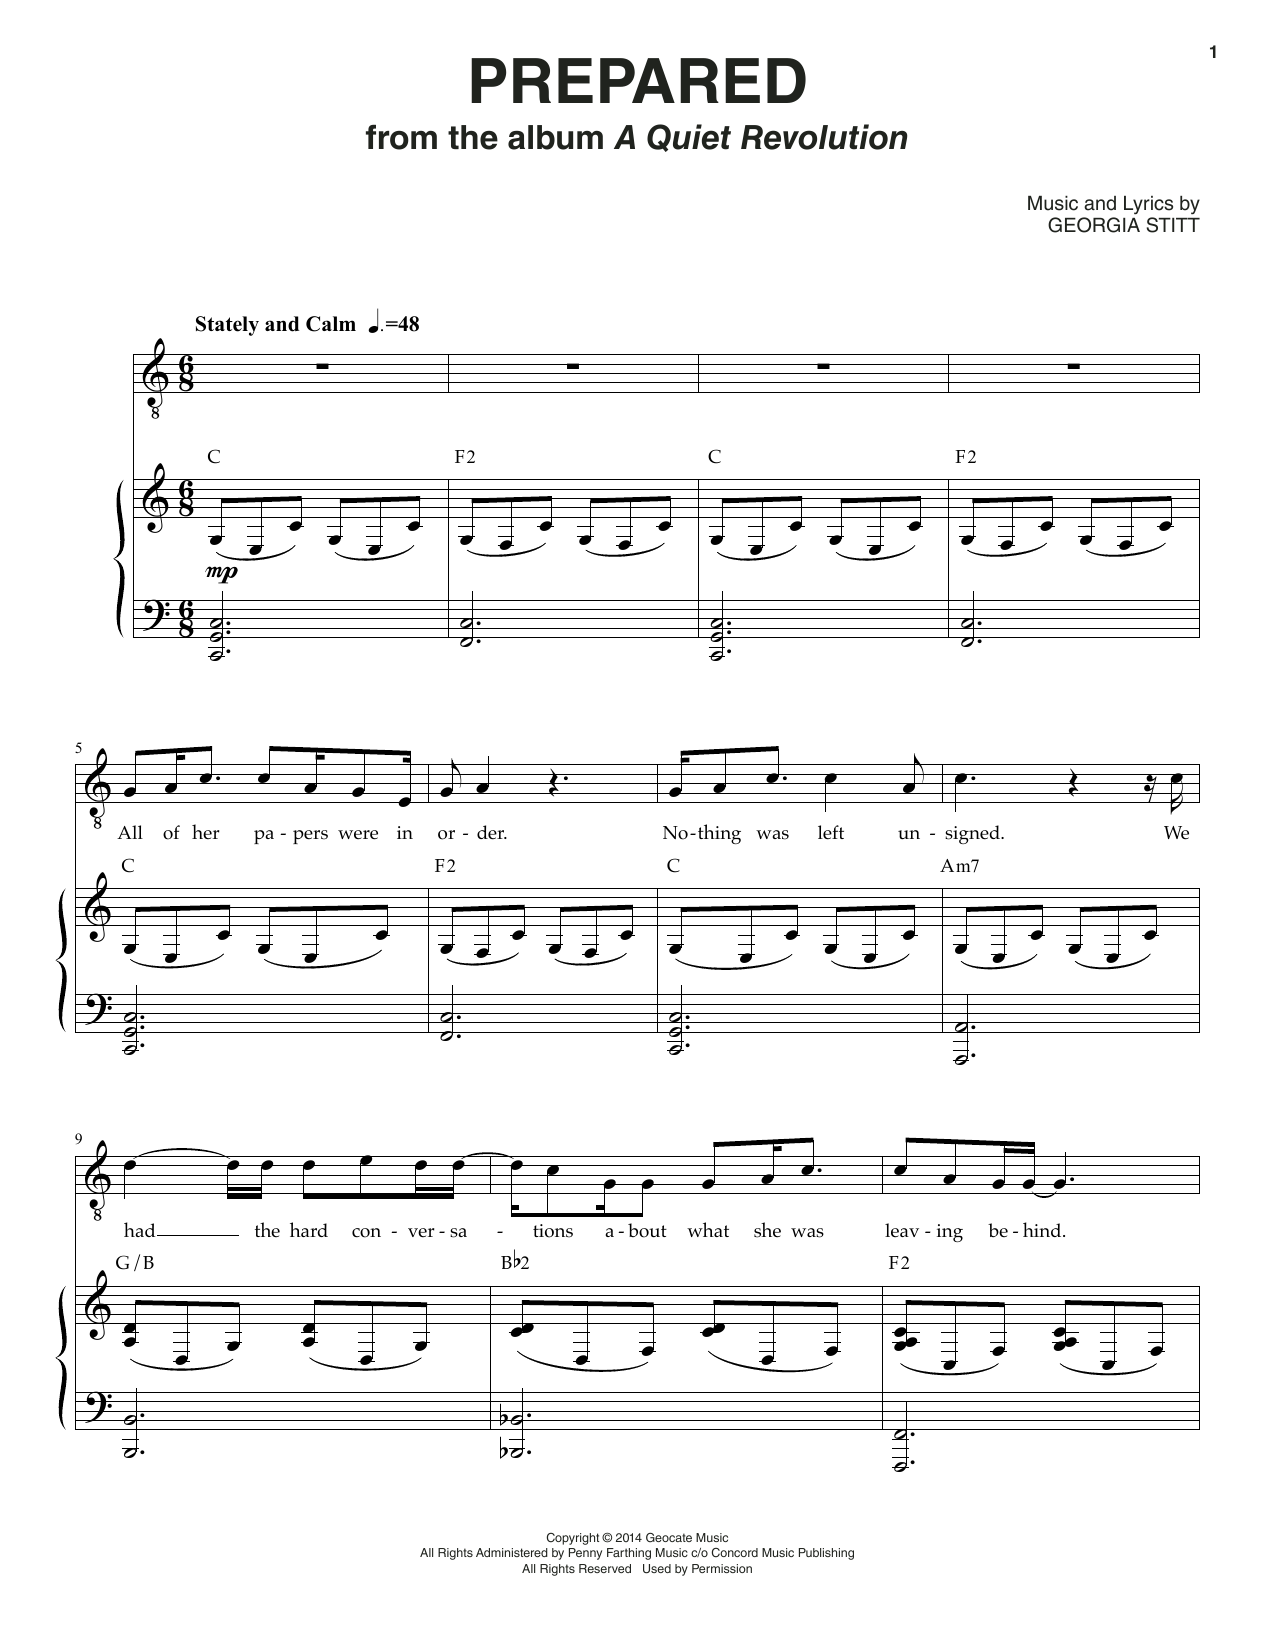 Georgia Stitt Prepared Sheet Music Notes & Chords for Piano & Vocal - Download or Print PDF